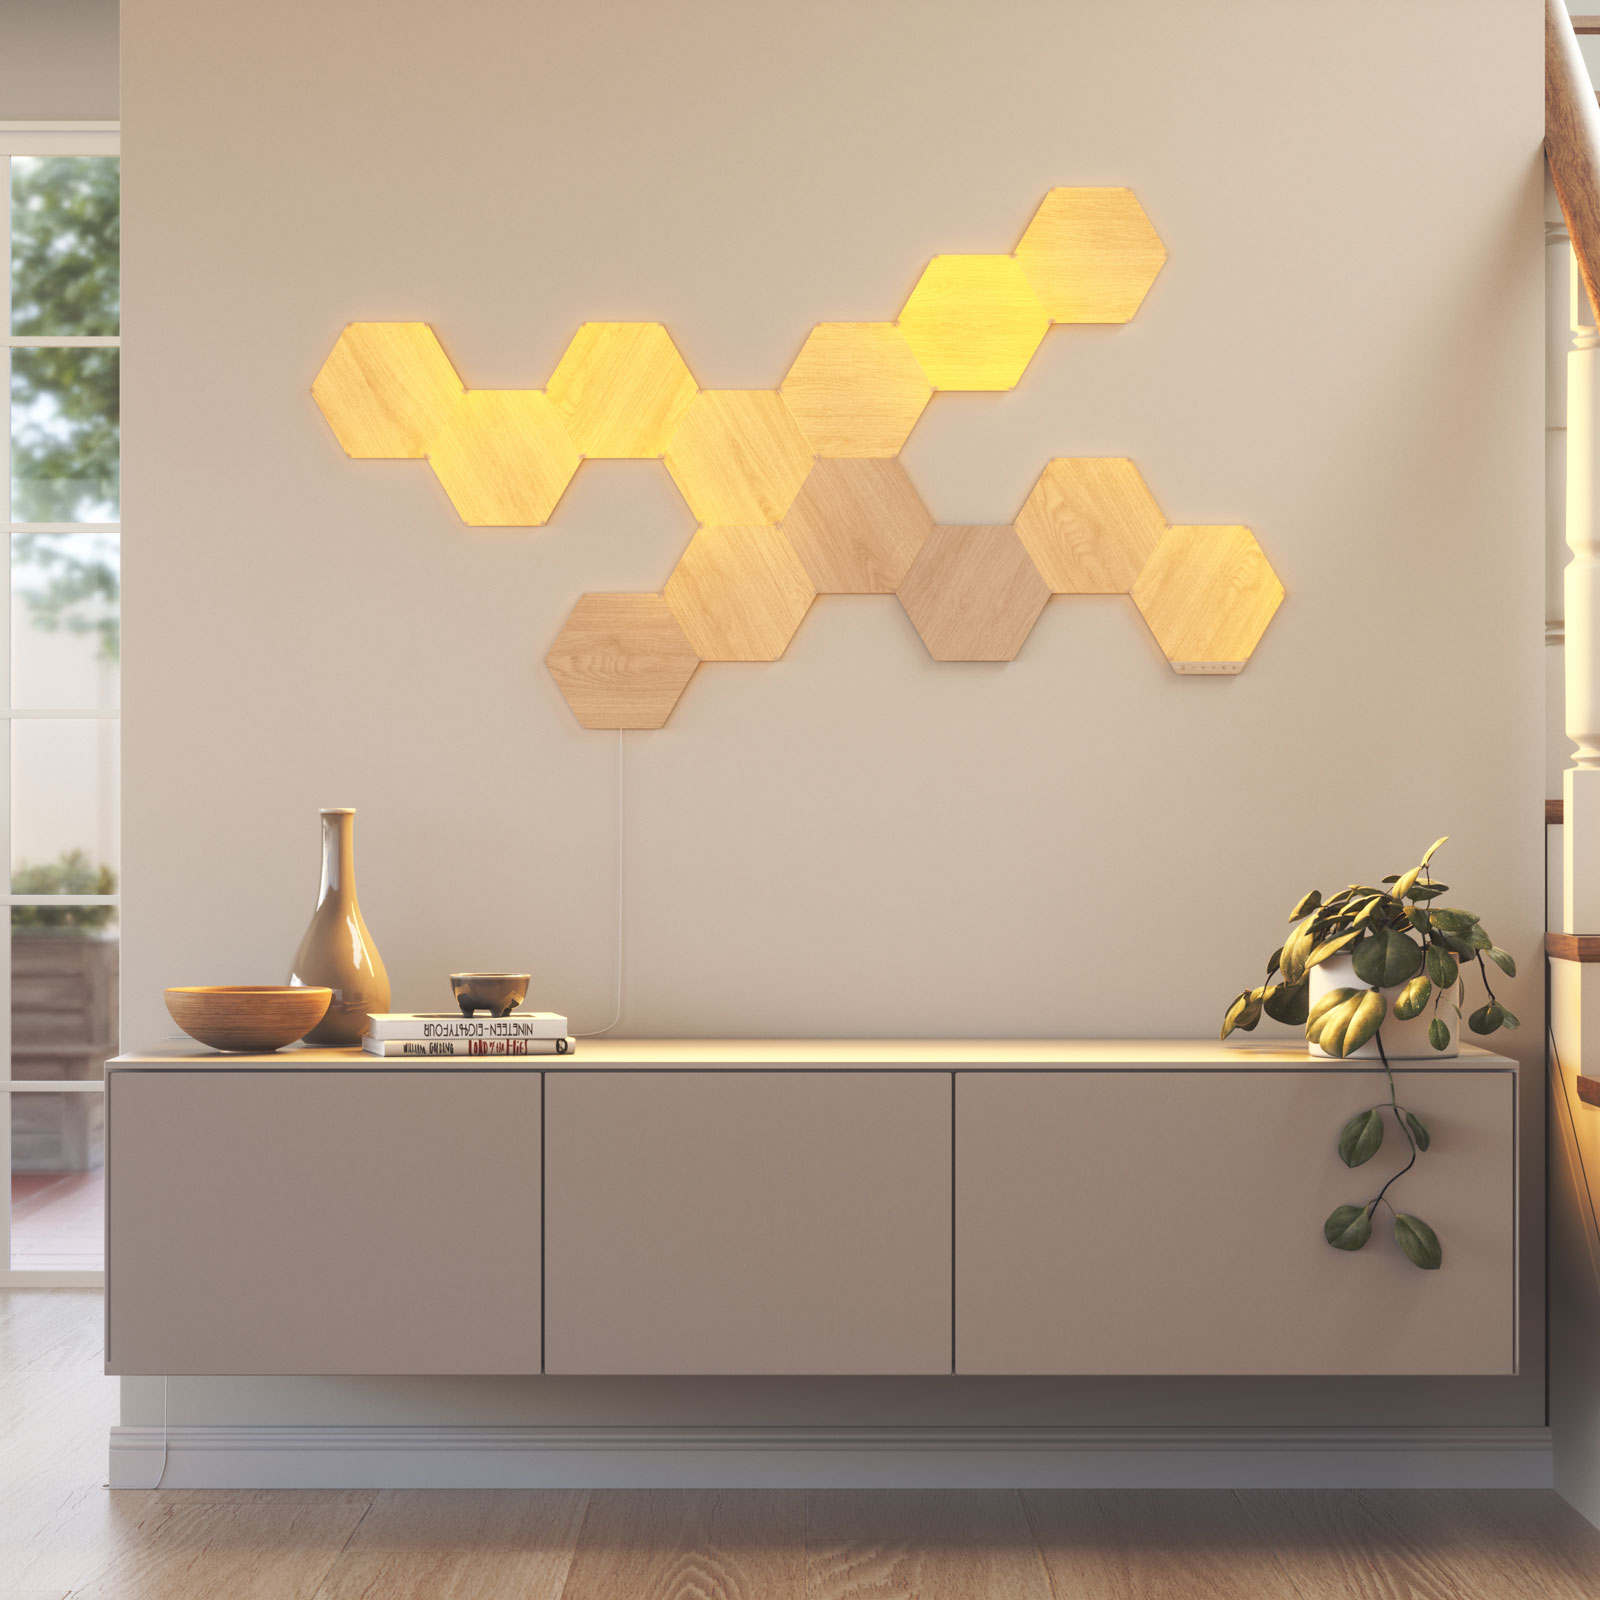 Nanoleaf Elements Wood Hexagons Starter Kit 13x